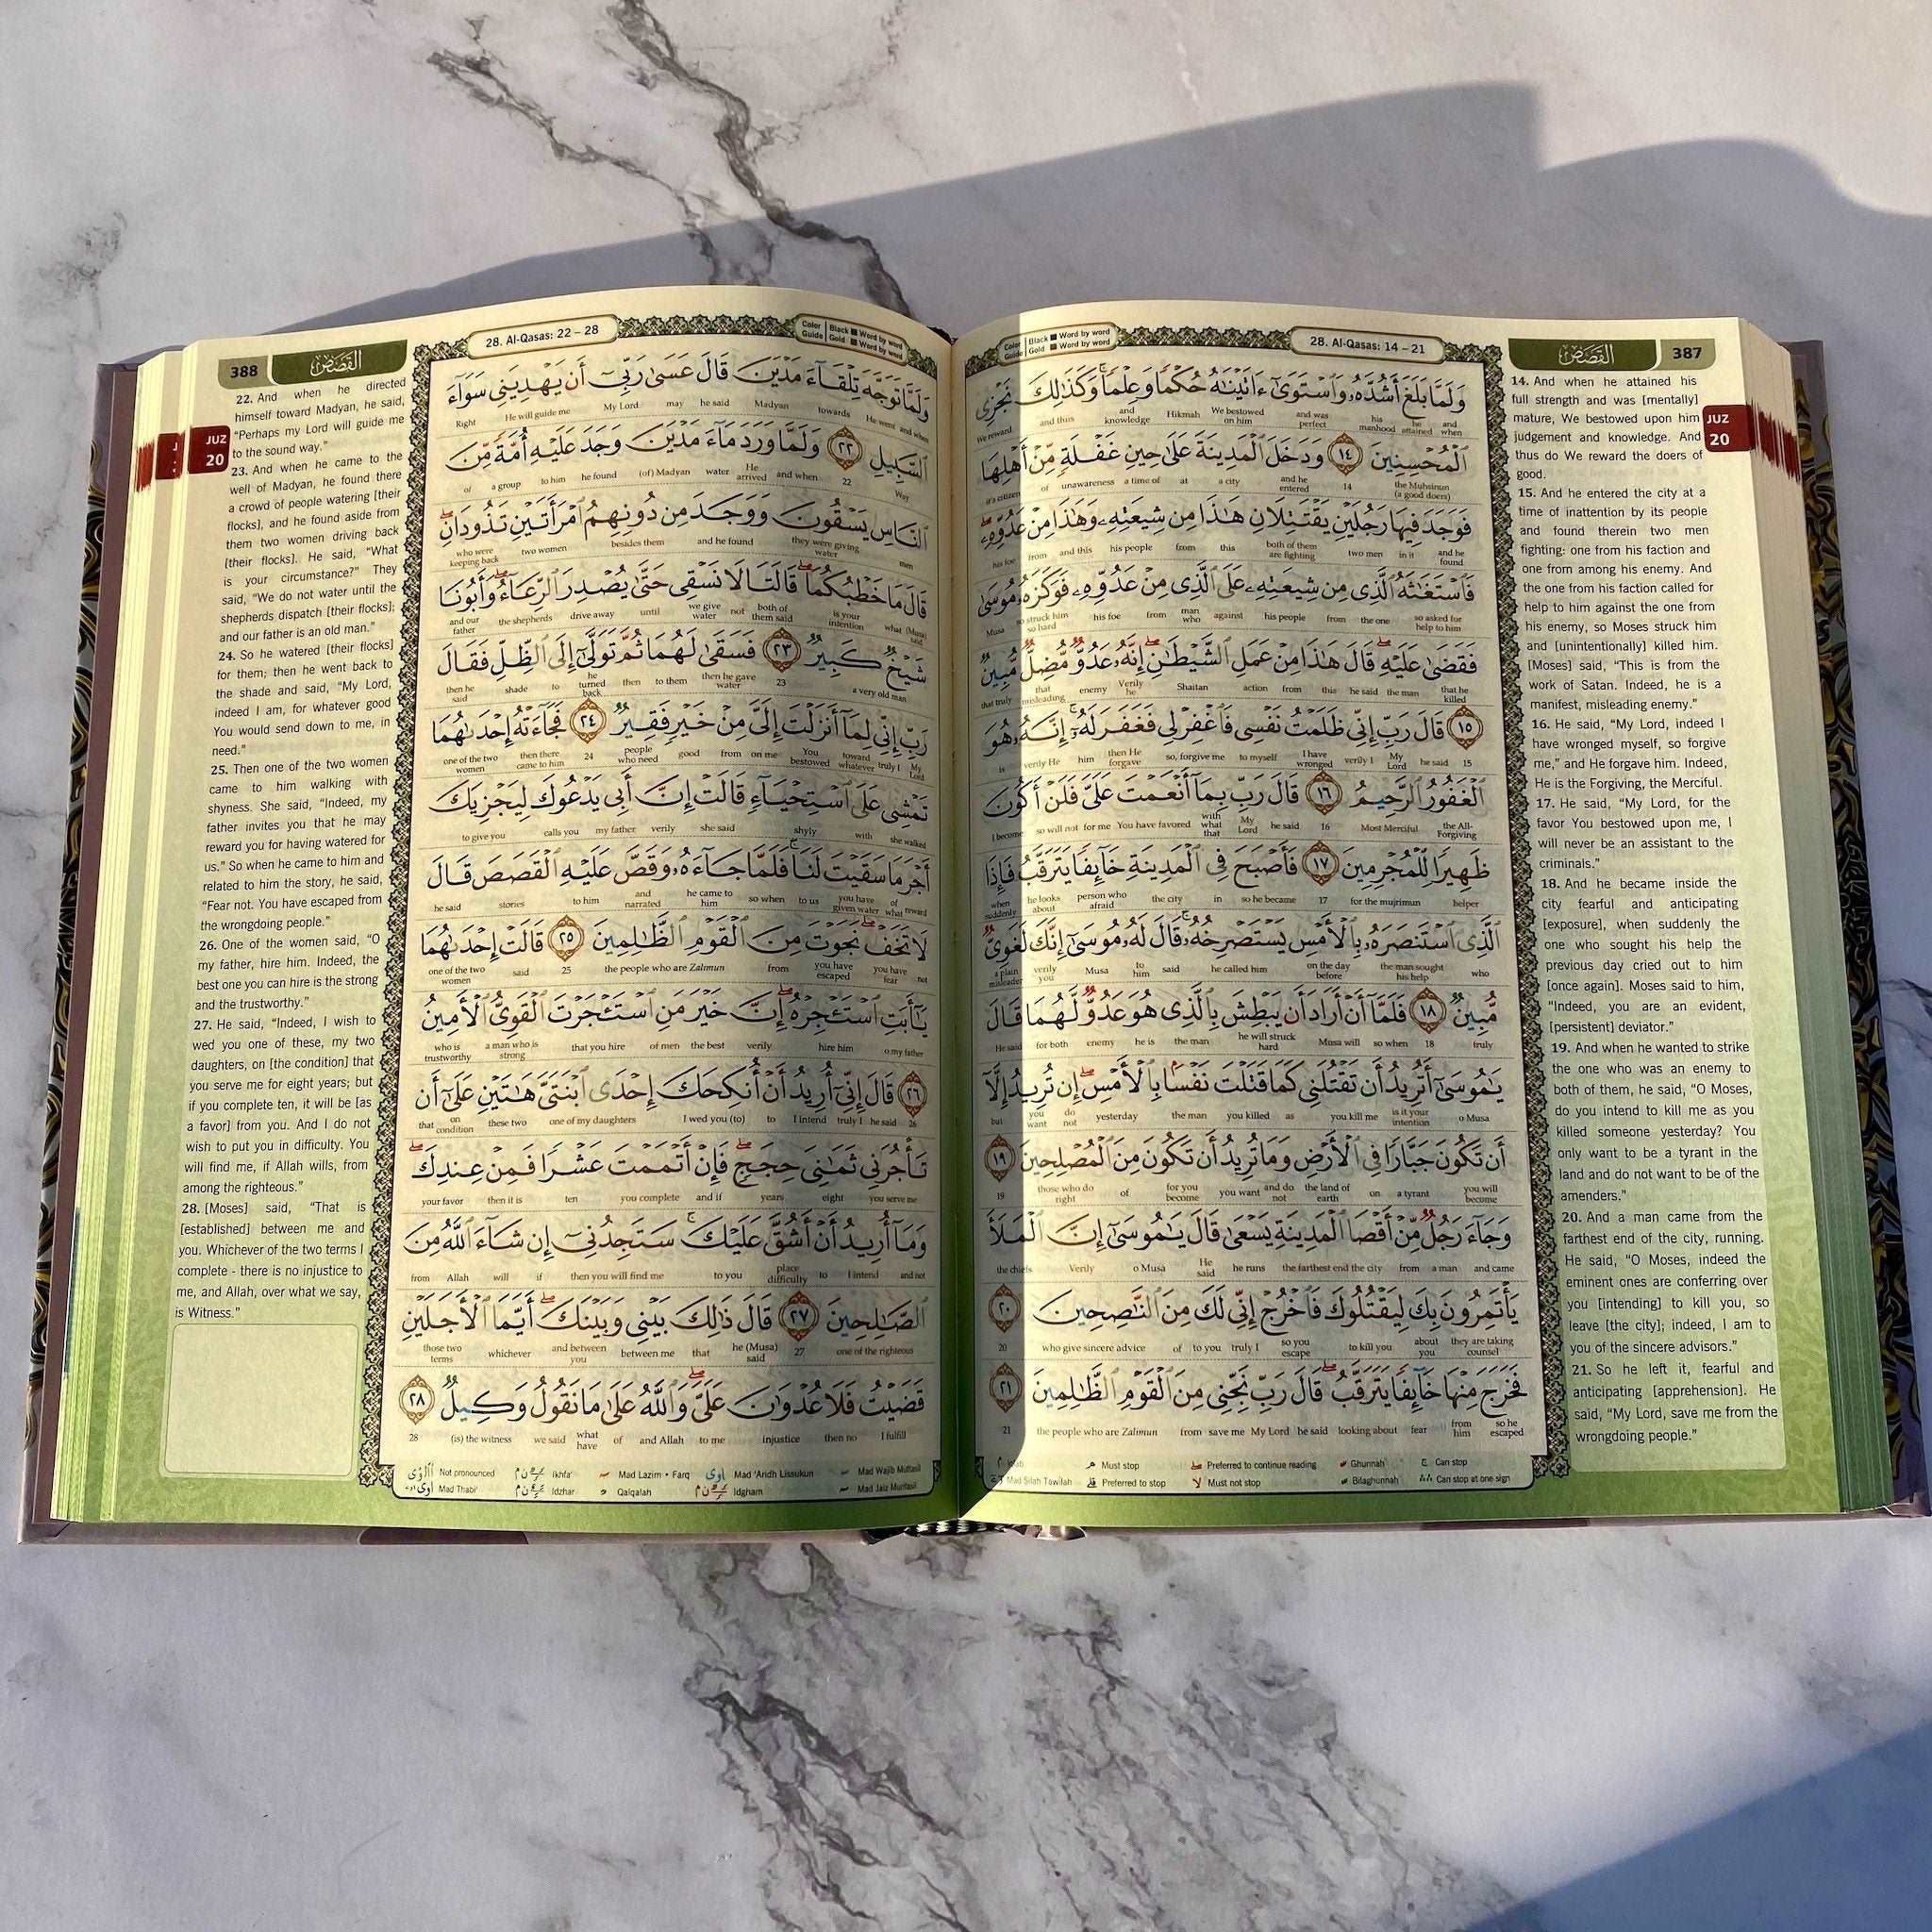 Al-Quran Al-Karim (Maqdis) Word by Word Translation A5 - Quran - Fajr Noor